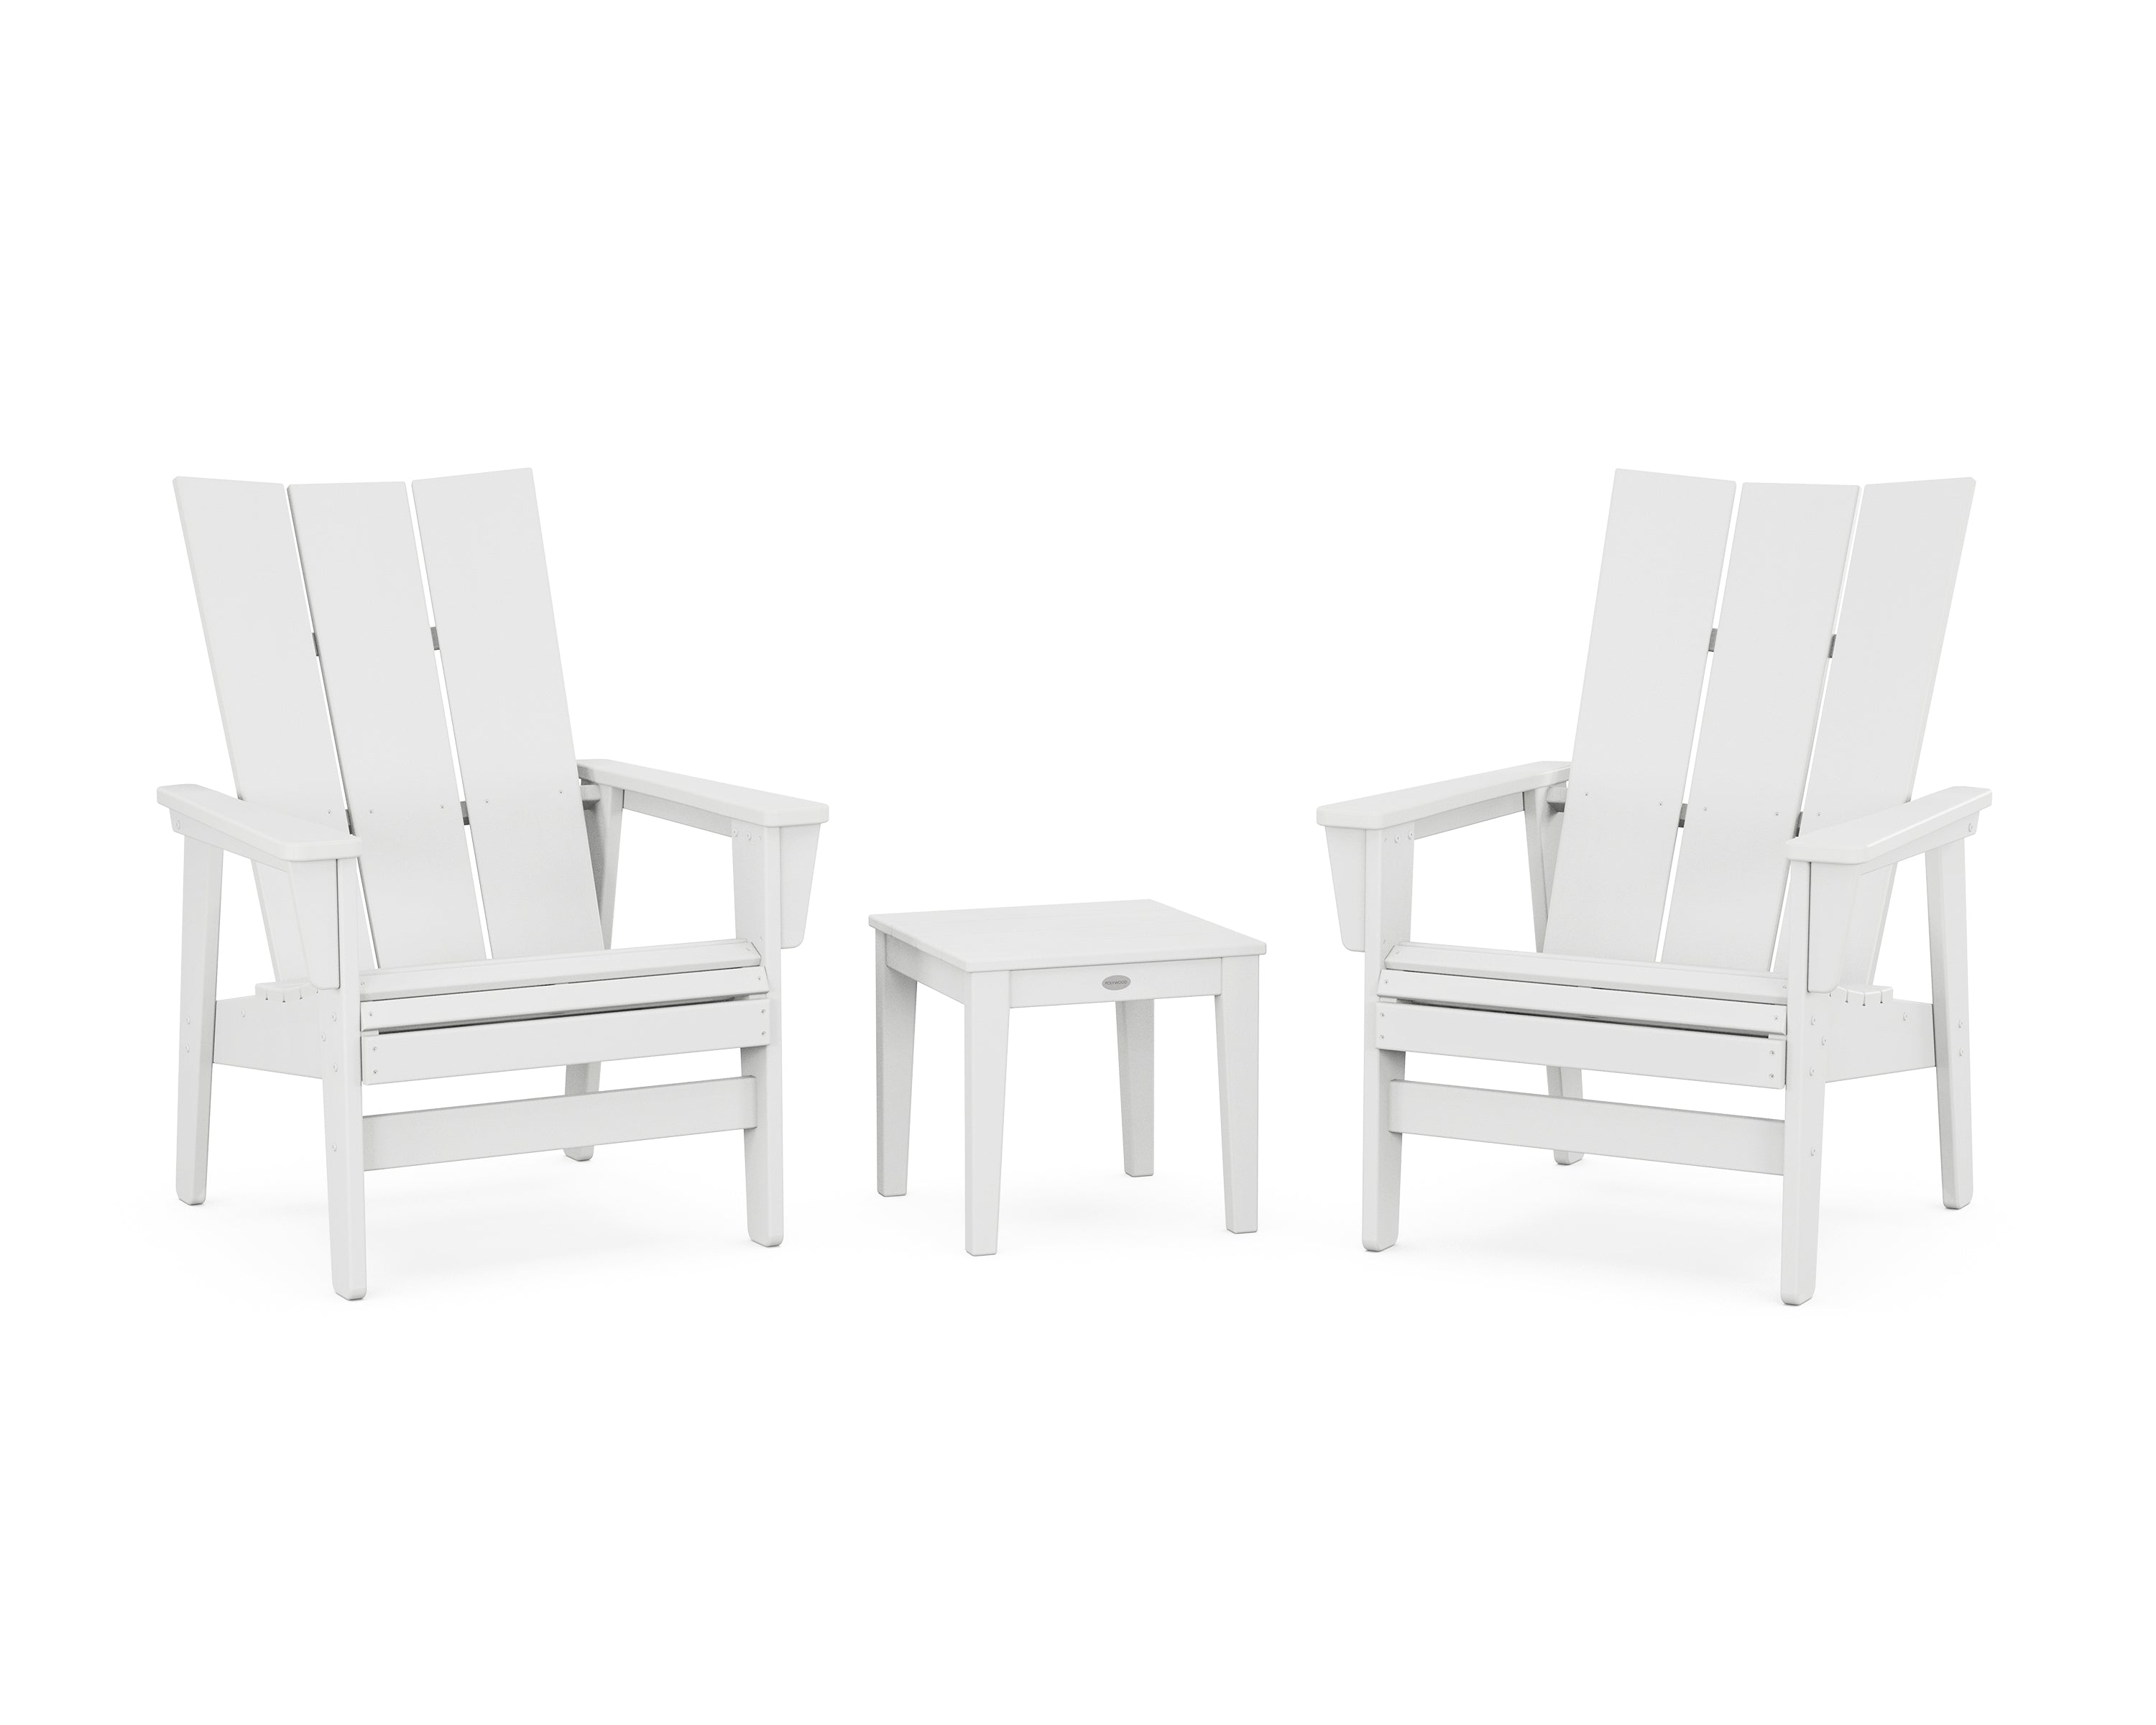 POLYWOOD® 3-Piece Modern Grand Upright Adirondack Set in White